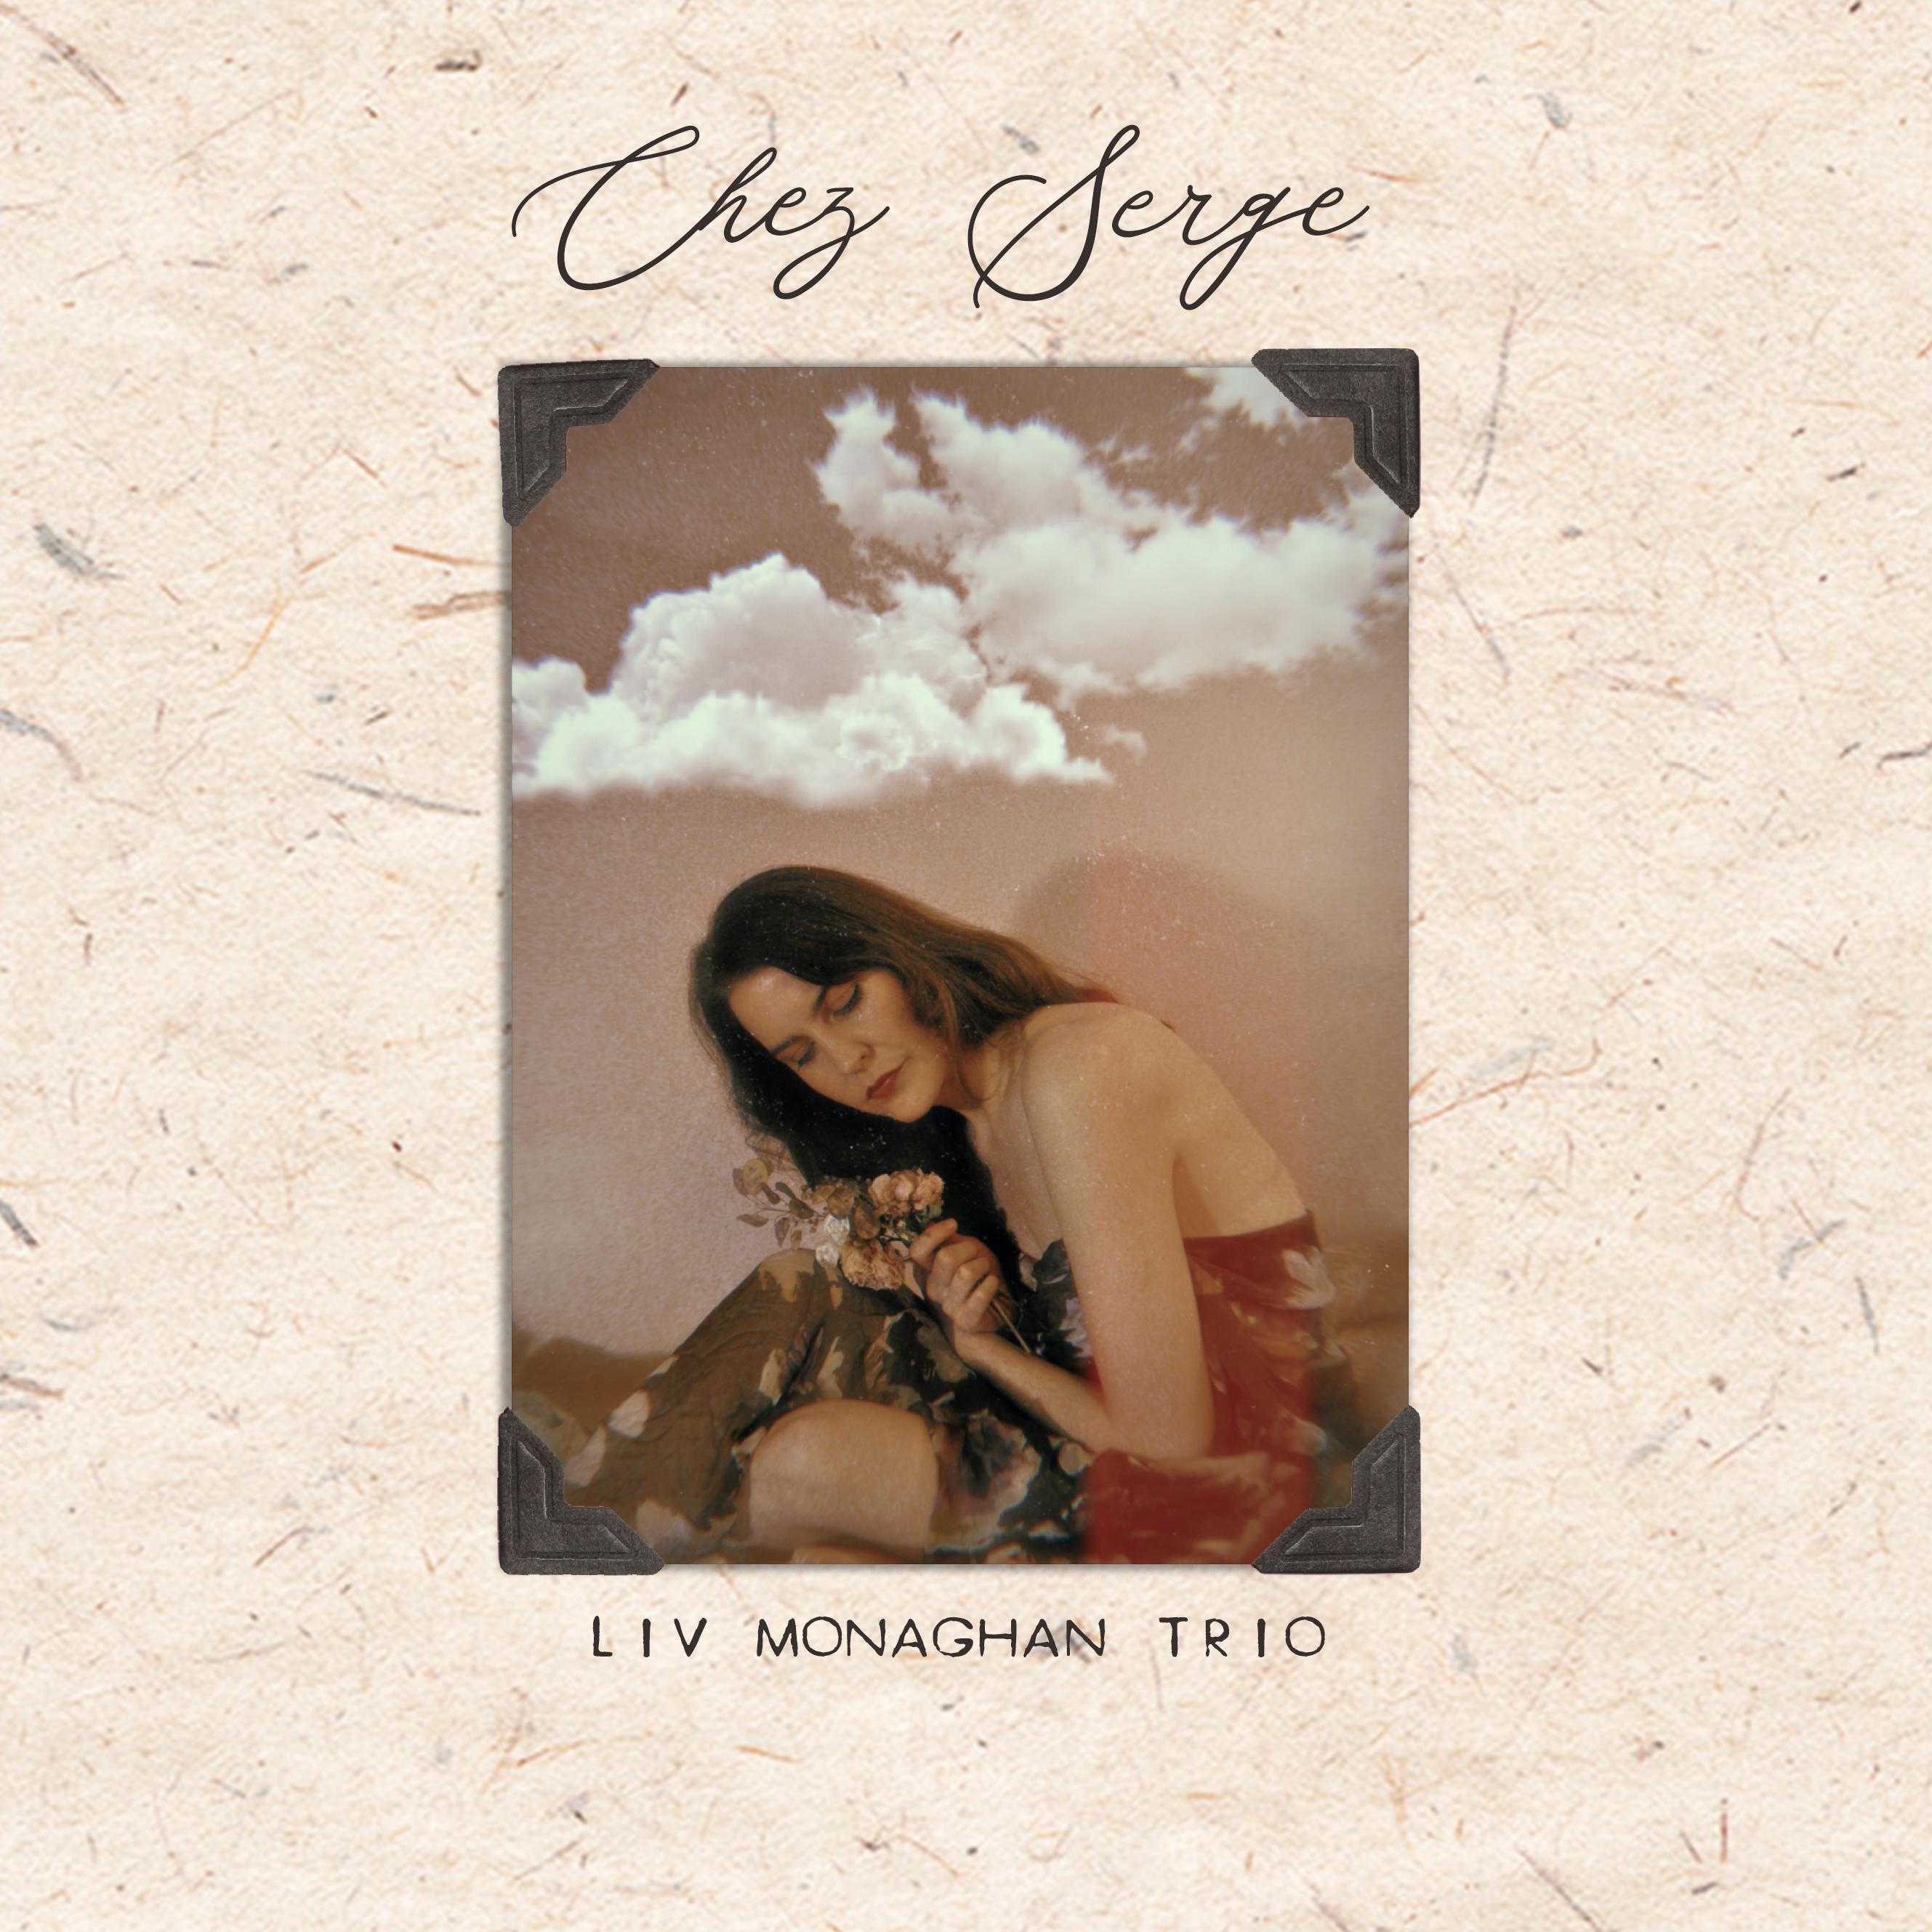 Liv Monaghan Trio Presents New project Chez Serge